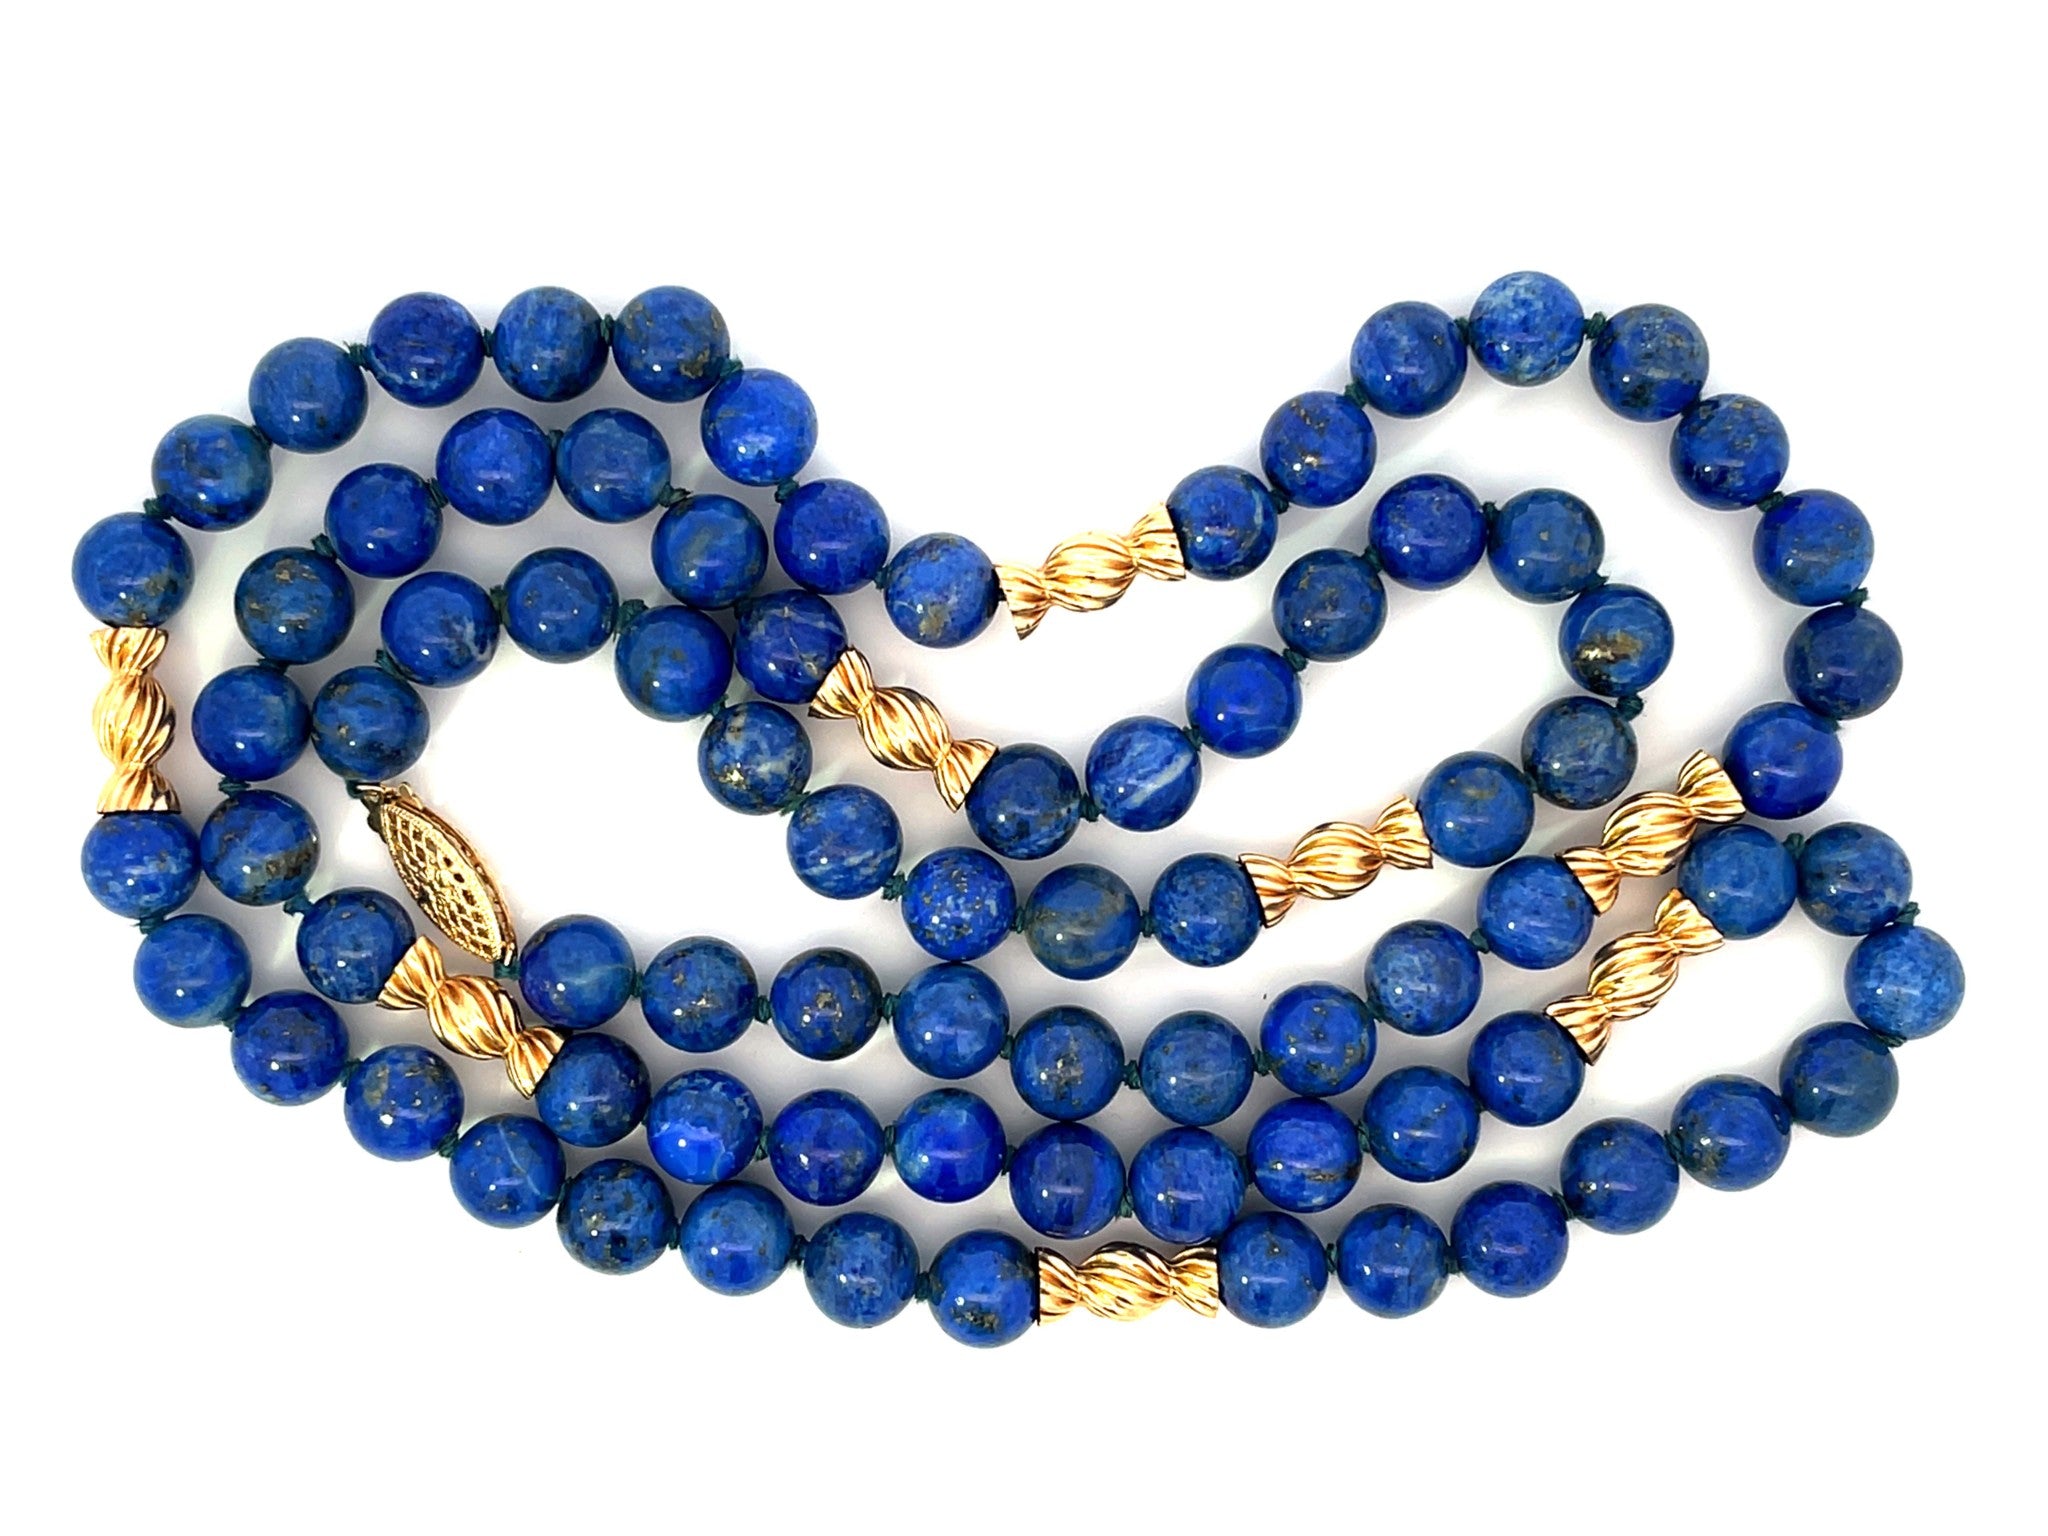 Lapis Lazuli Beaded Necklace 14k Yellow Gold